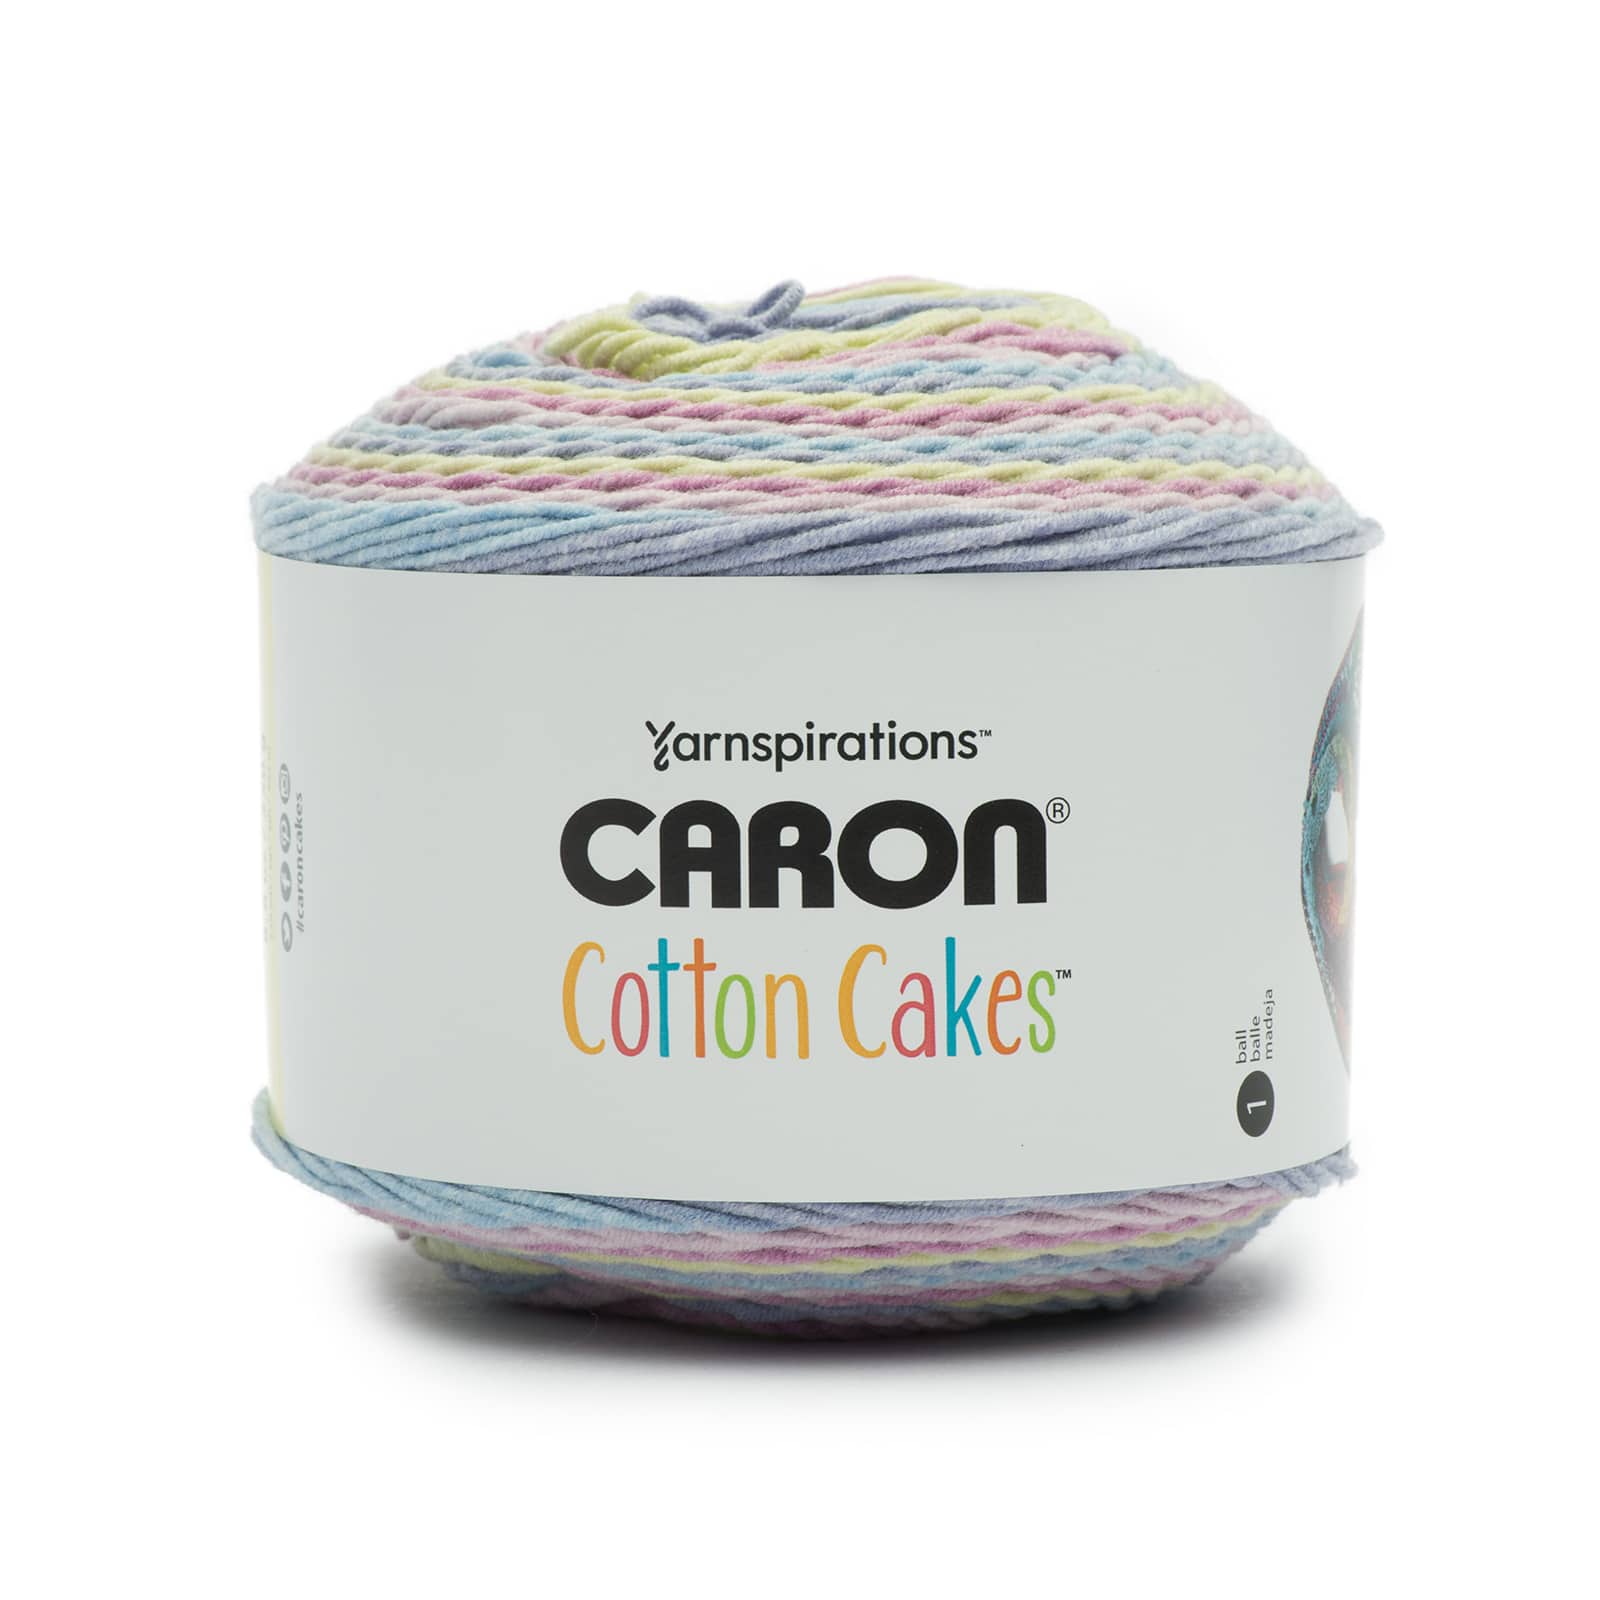 Caron Cakes Yarn 7.1 oz - Faerie Cake Lot of 2 - Clearance/Liquidation!